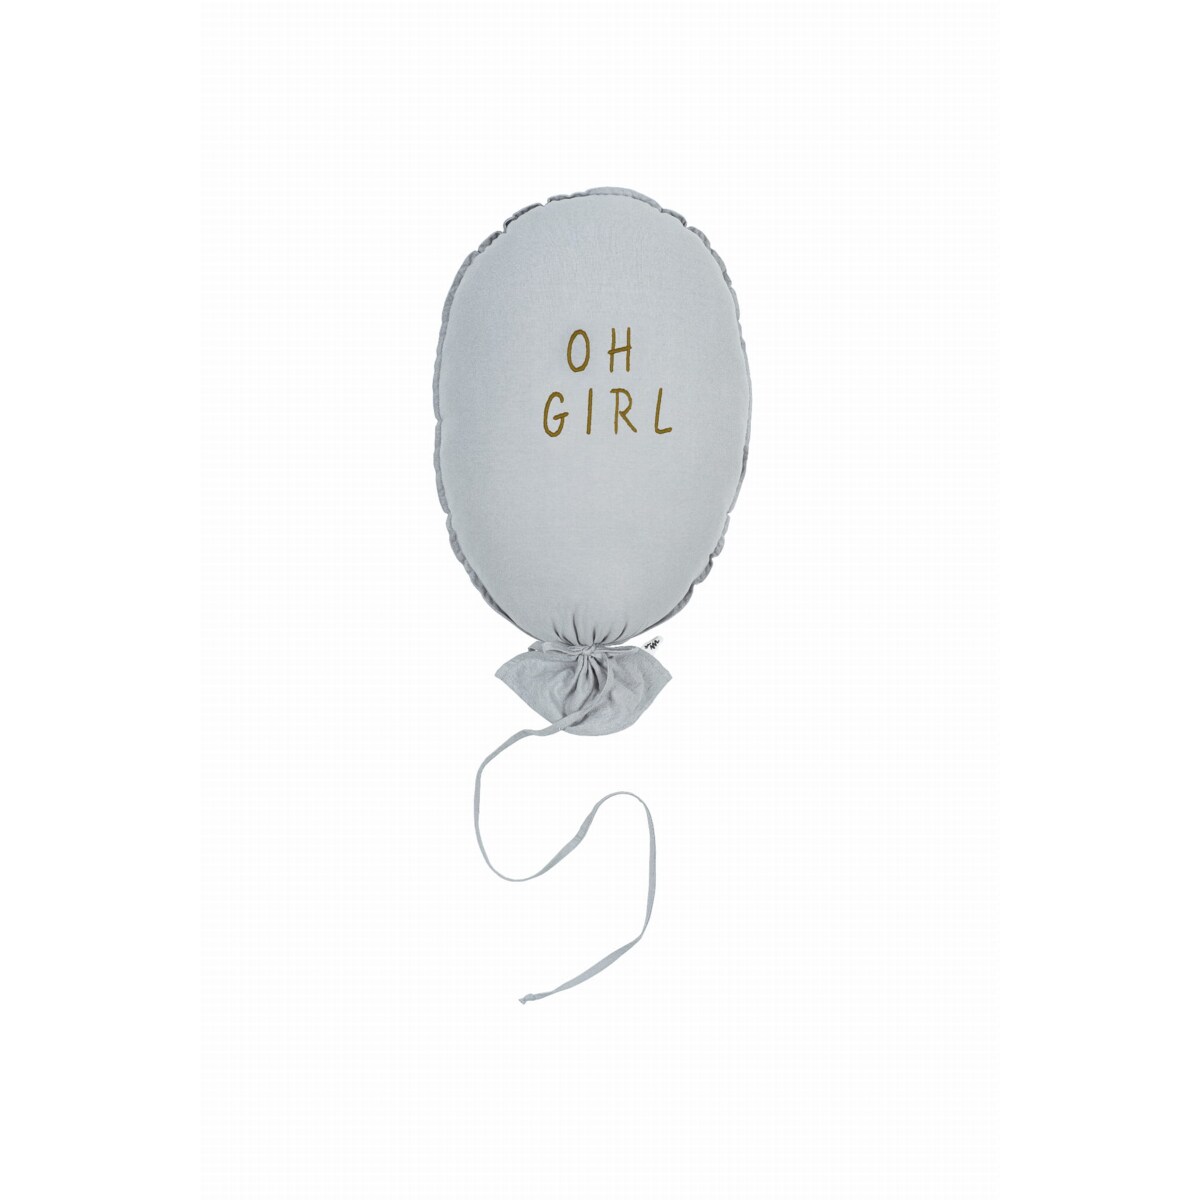 Balon dekoracyjny light grey - OH GIRL, CARAMEL